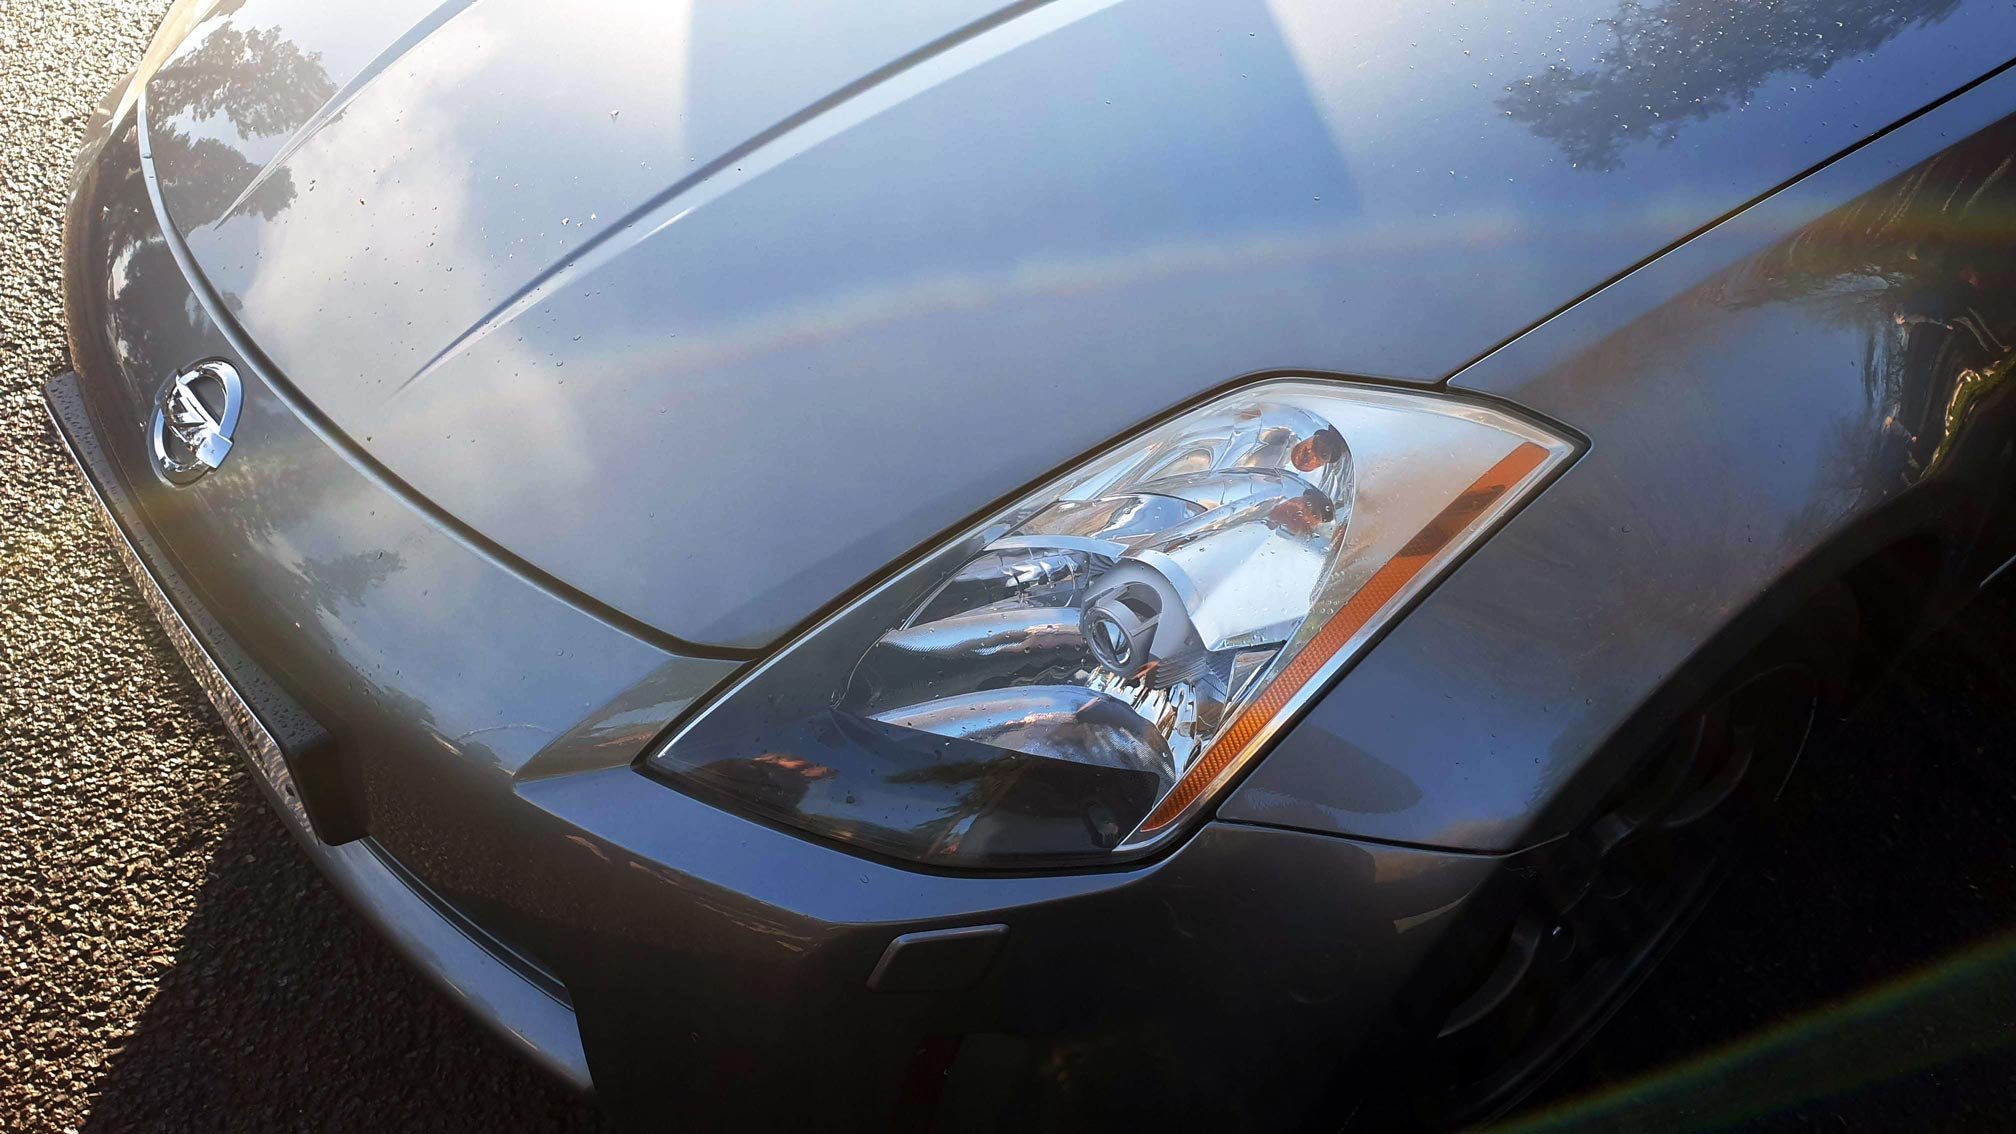 Dark silver Nissan with hood and headlights